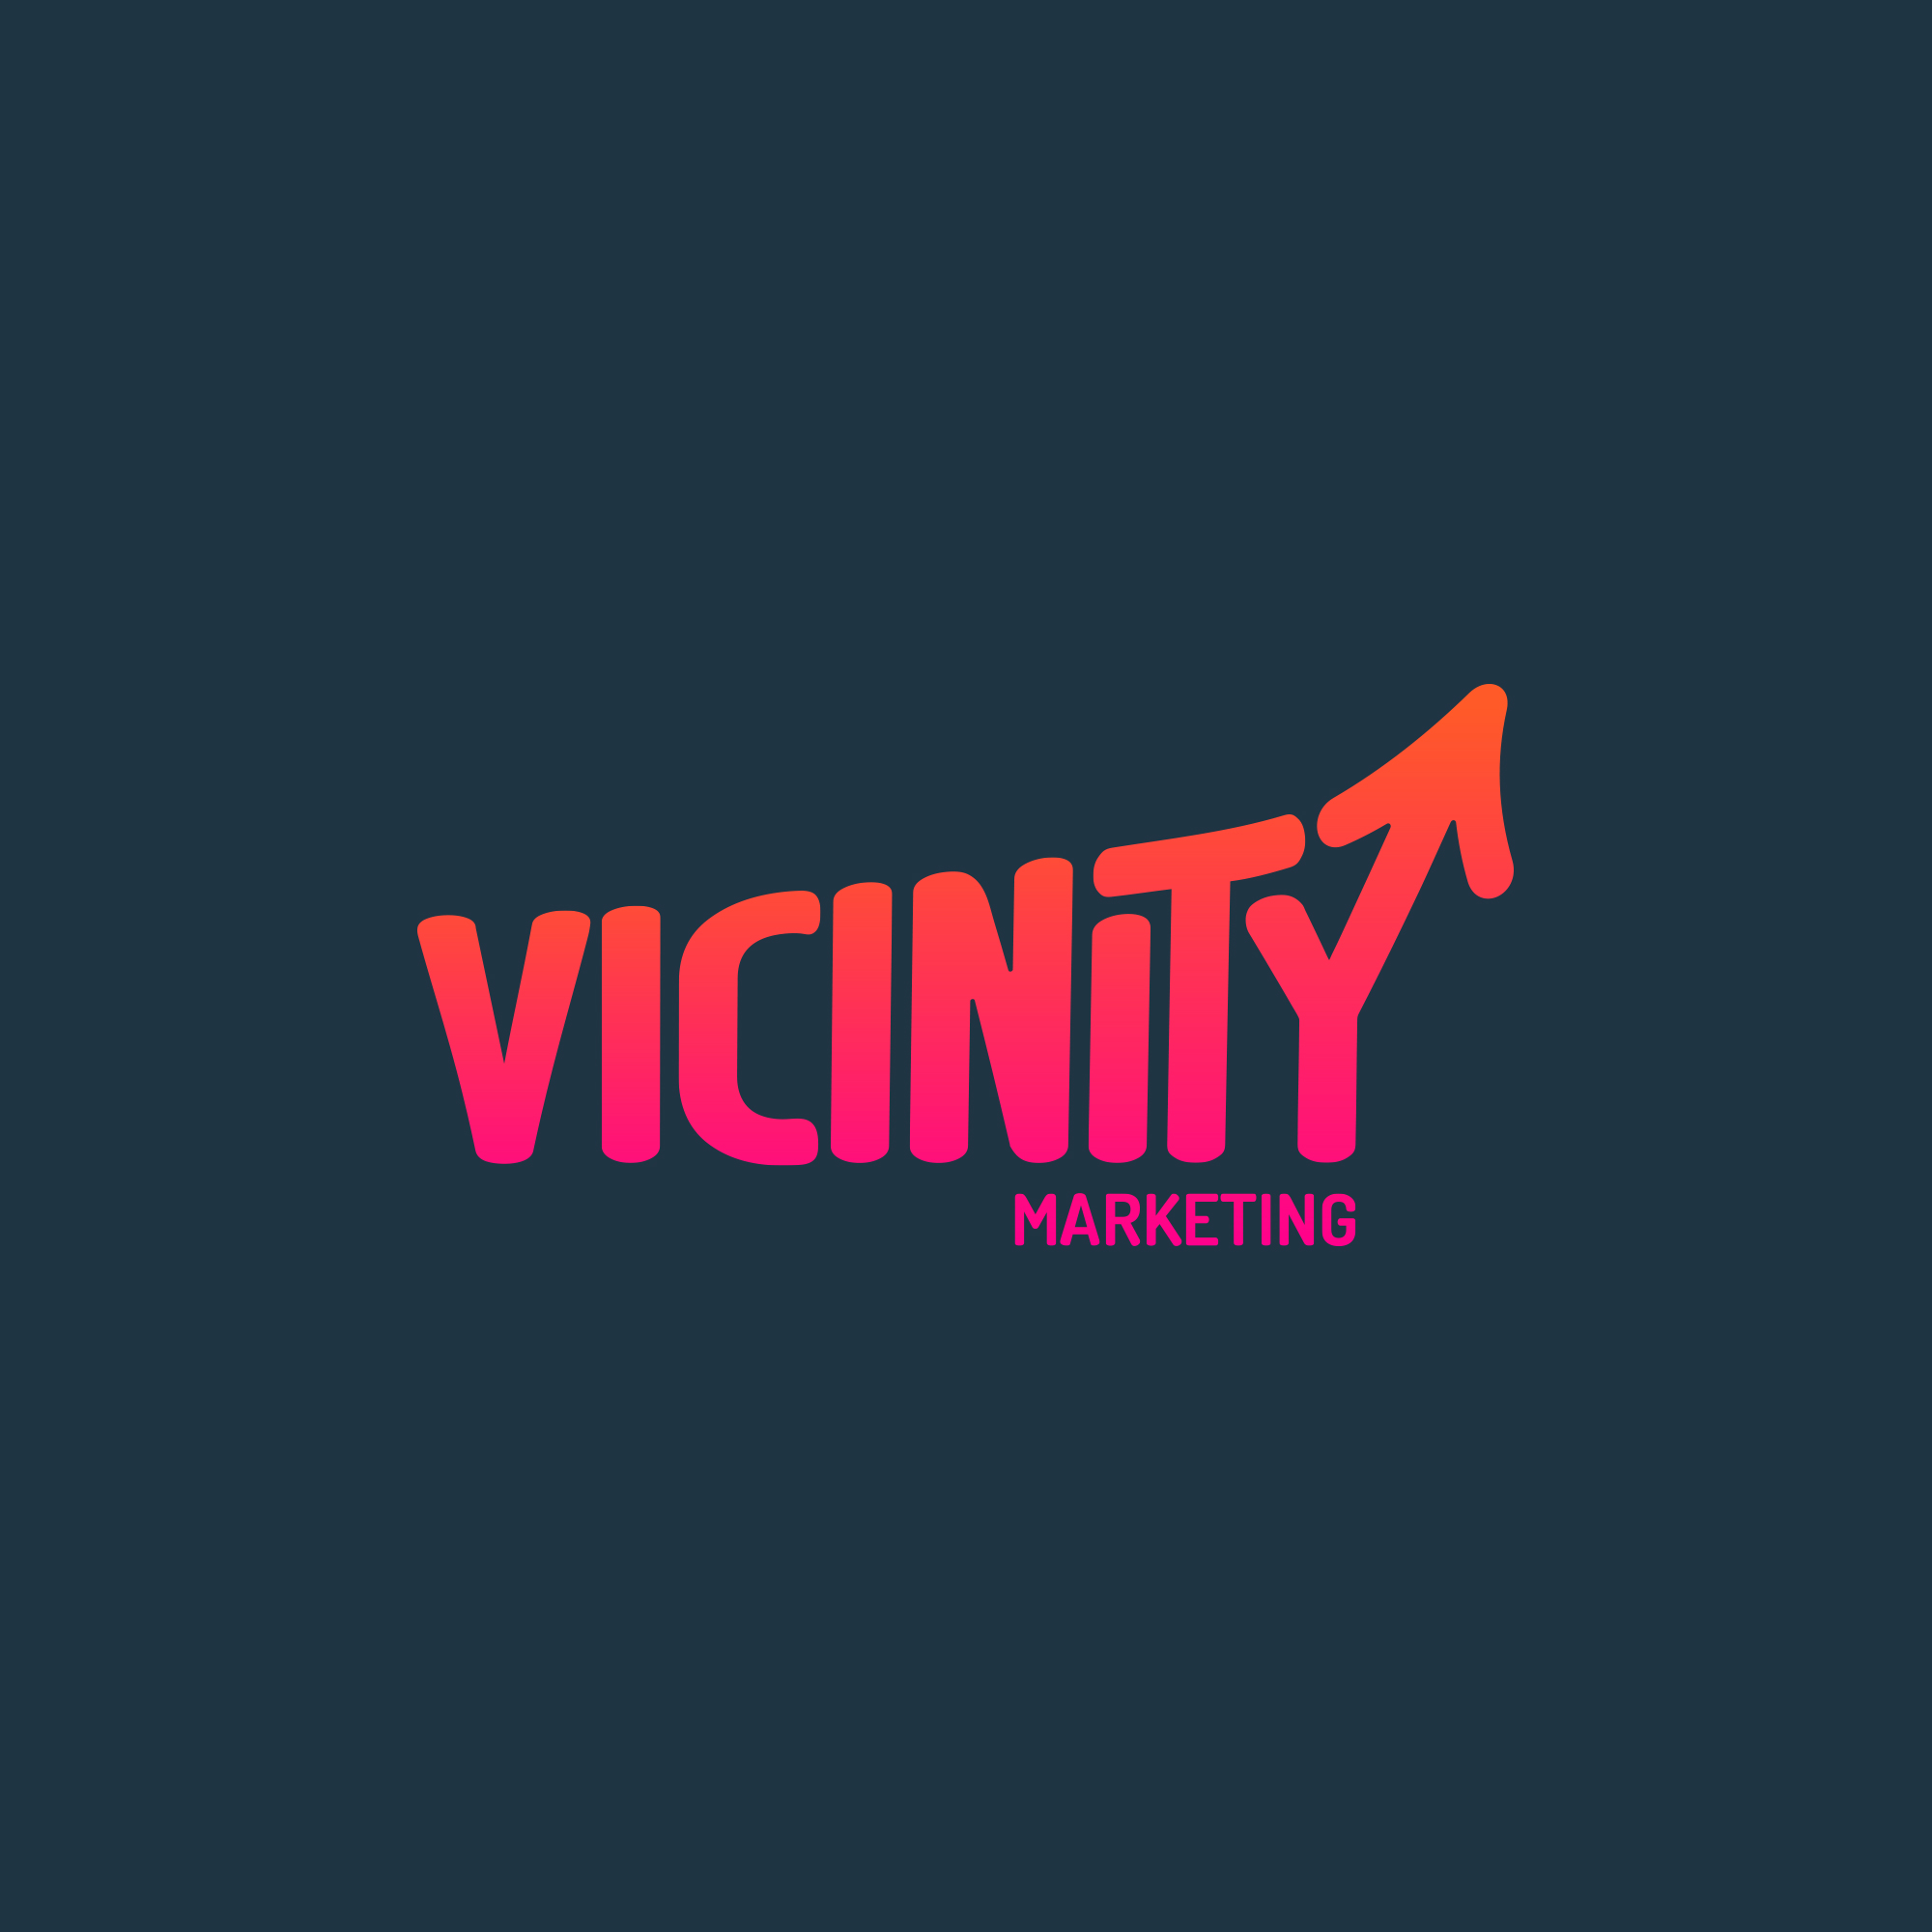 Vicinity Marketing on Blue